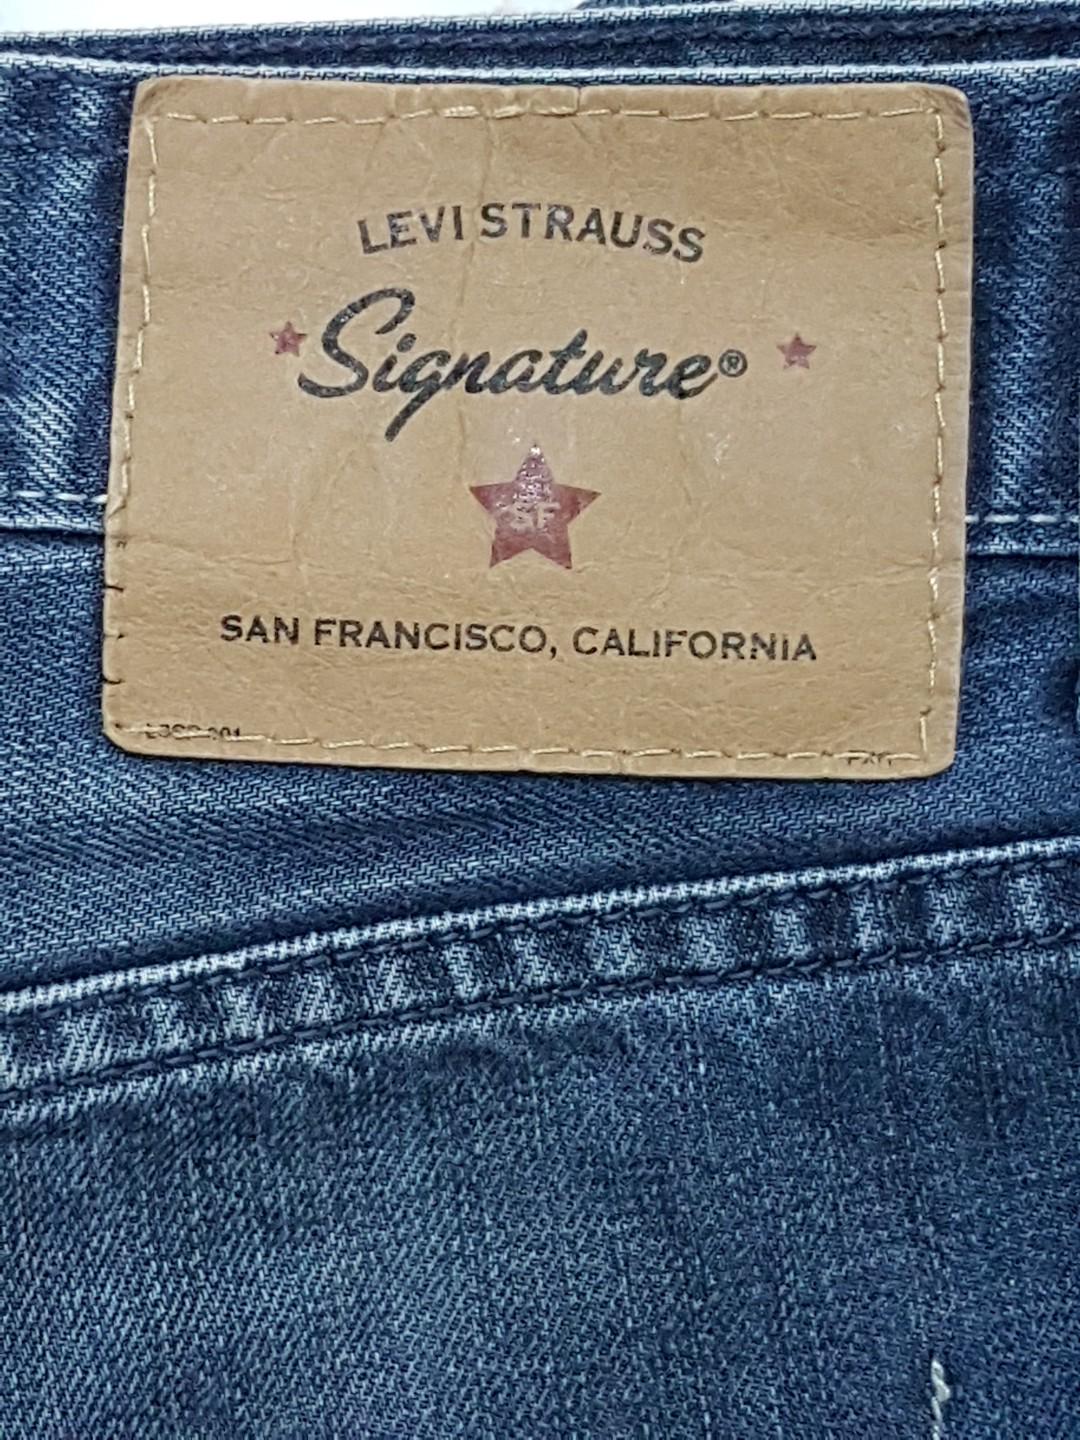 who sells levi signature jeans